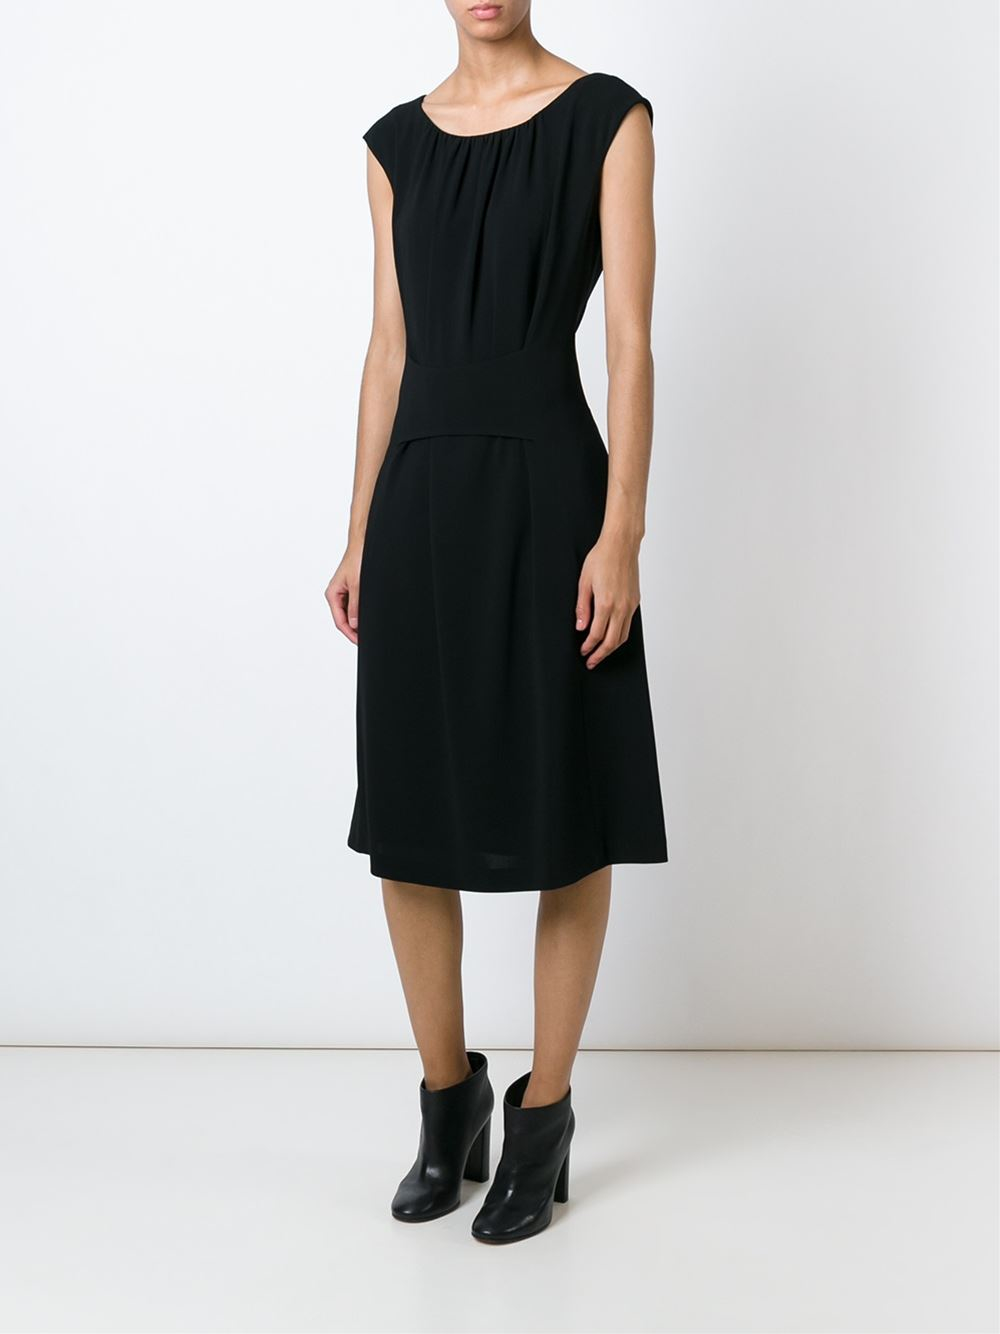 Lyst - Aspesi Raglan Sleeve Dress in Black